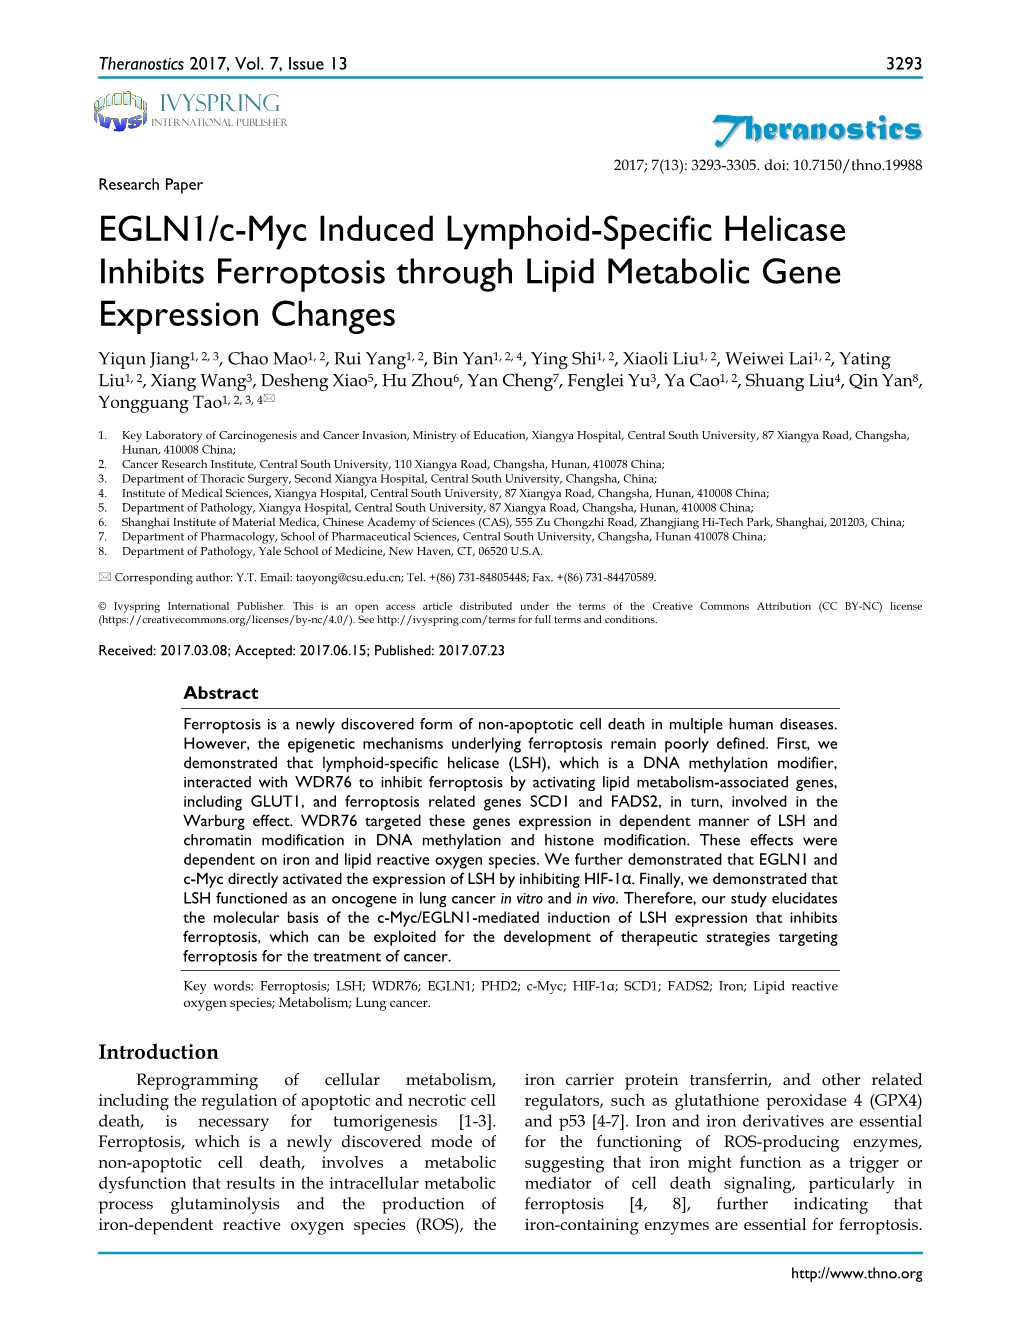 Theranostics EGLN1/C-Myc Induced Lymphoid-Specific Helicase Inhibits